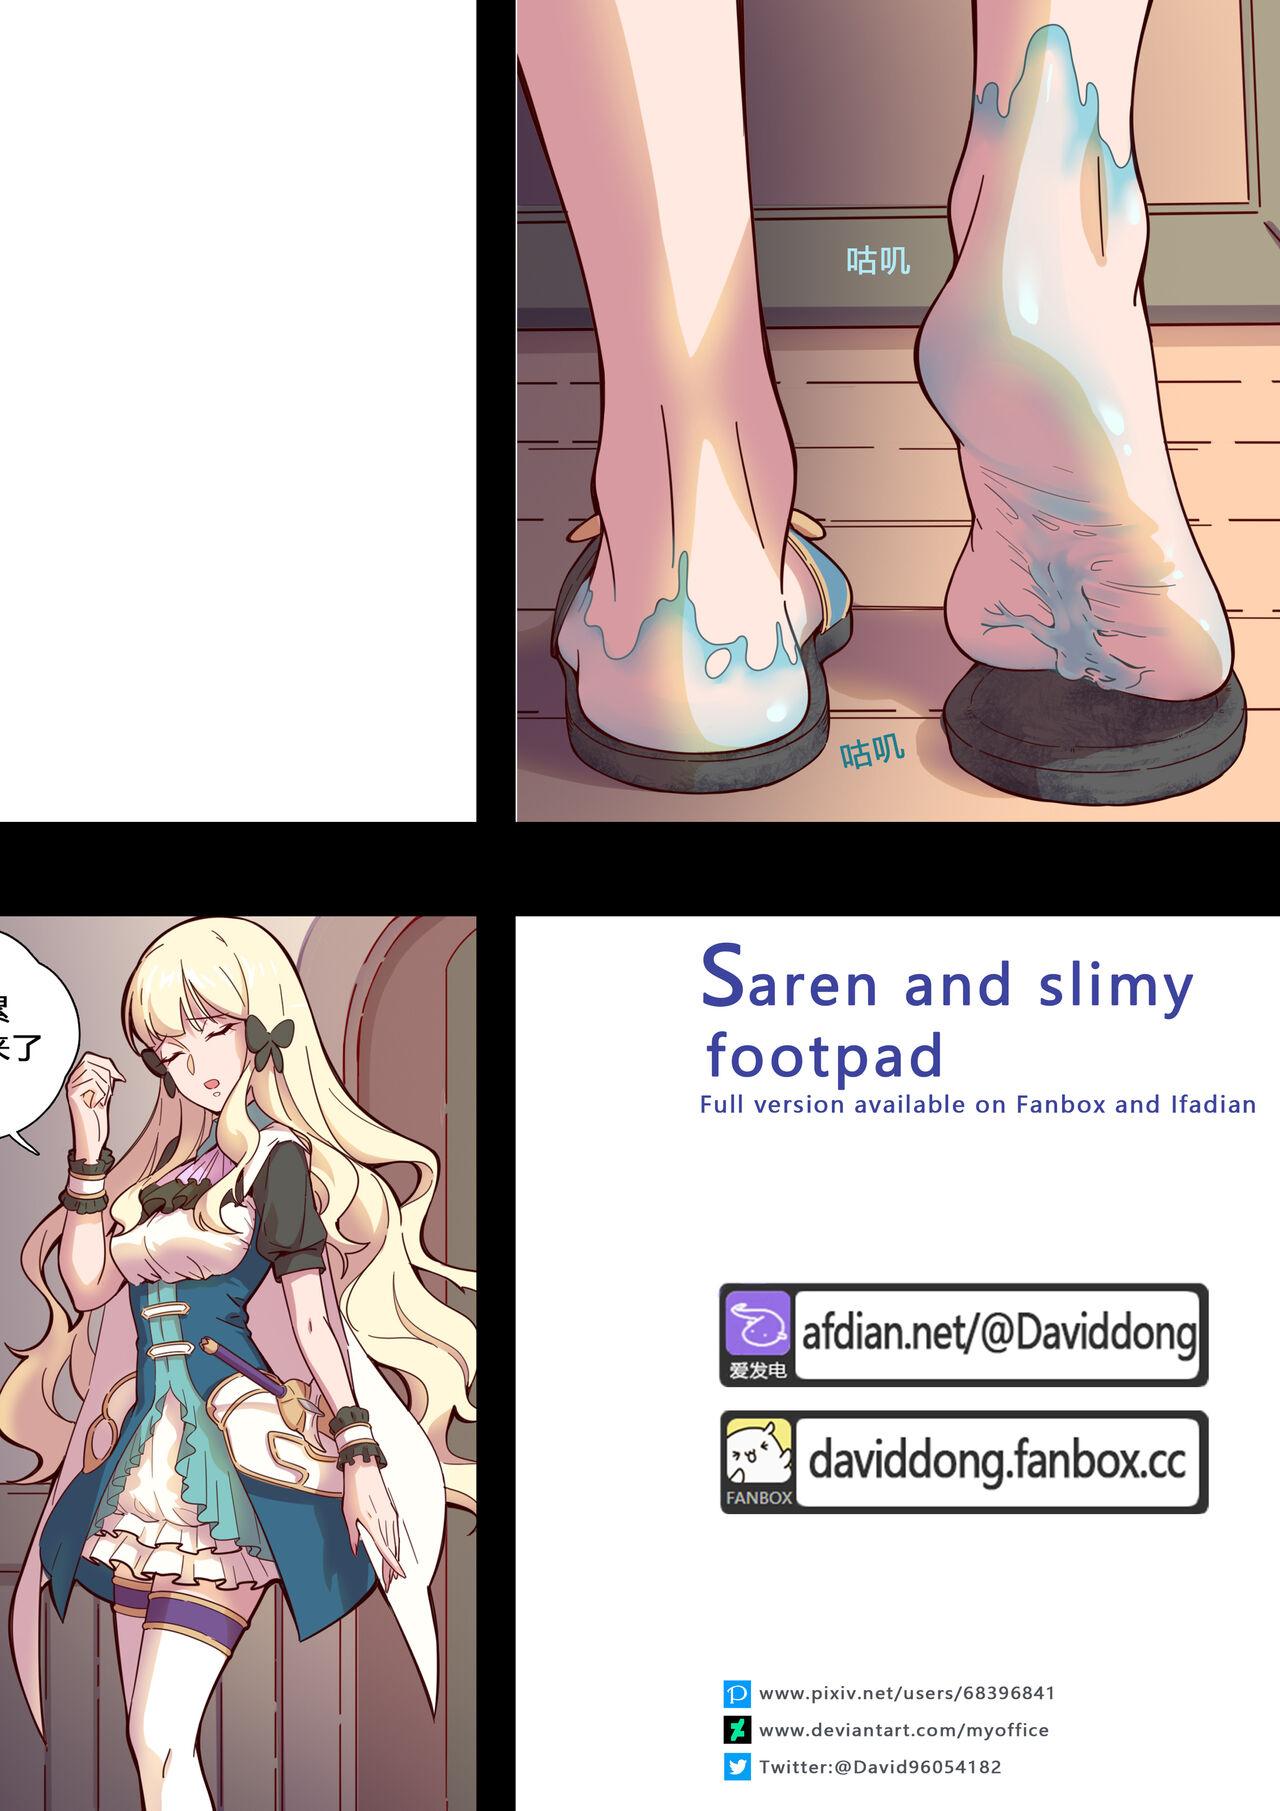 Olderwoman - Saren and slimy footpad - Princess connect Amateur Free Porn - Picture 1